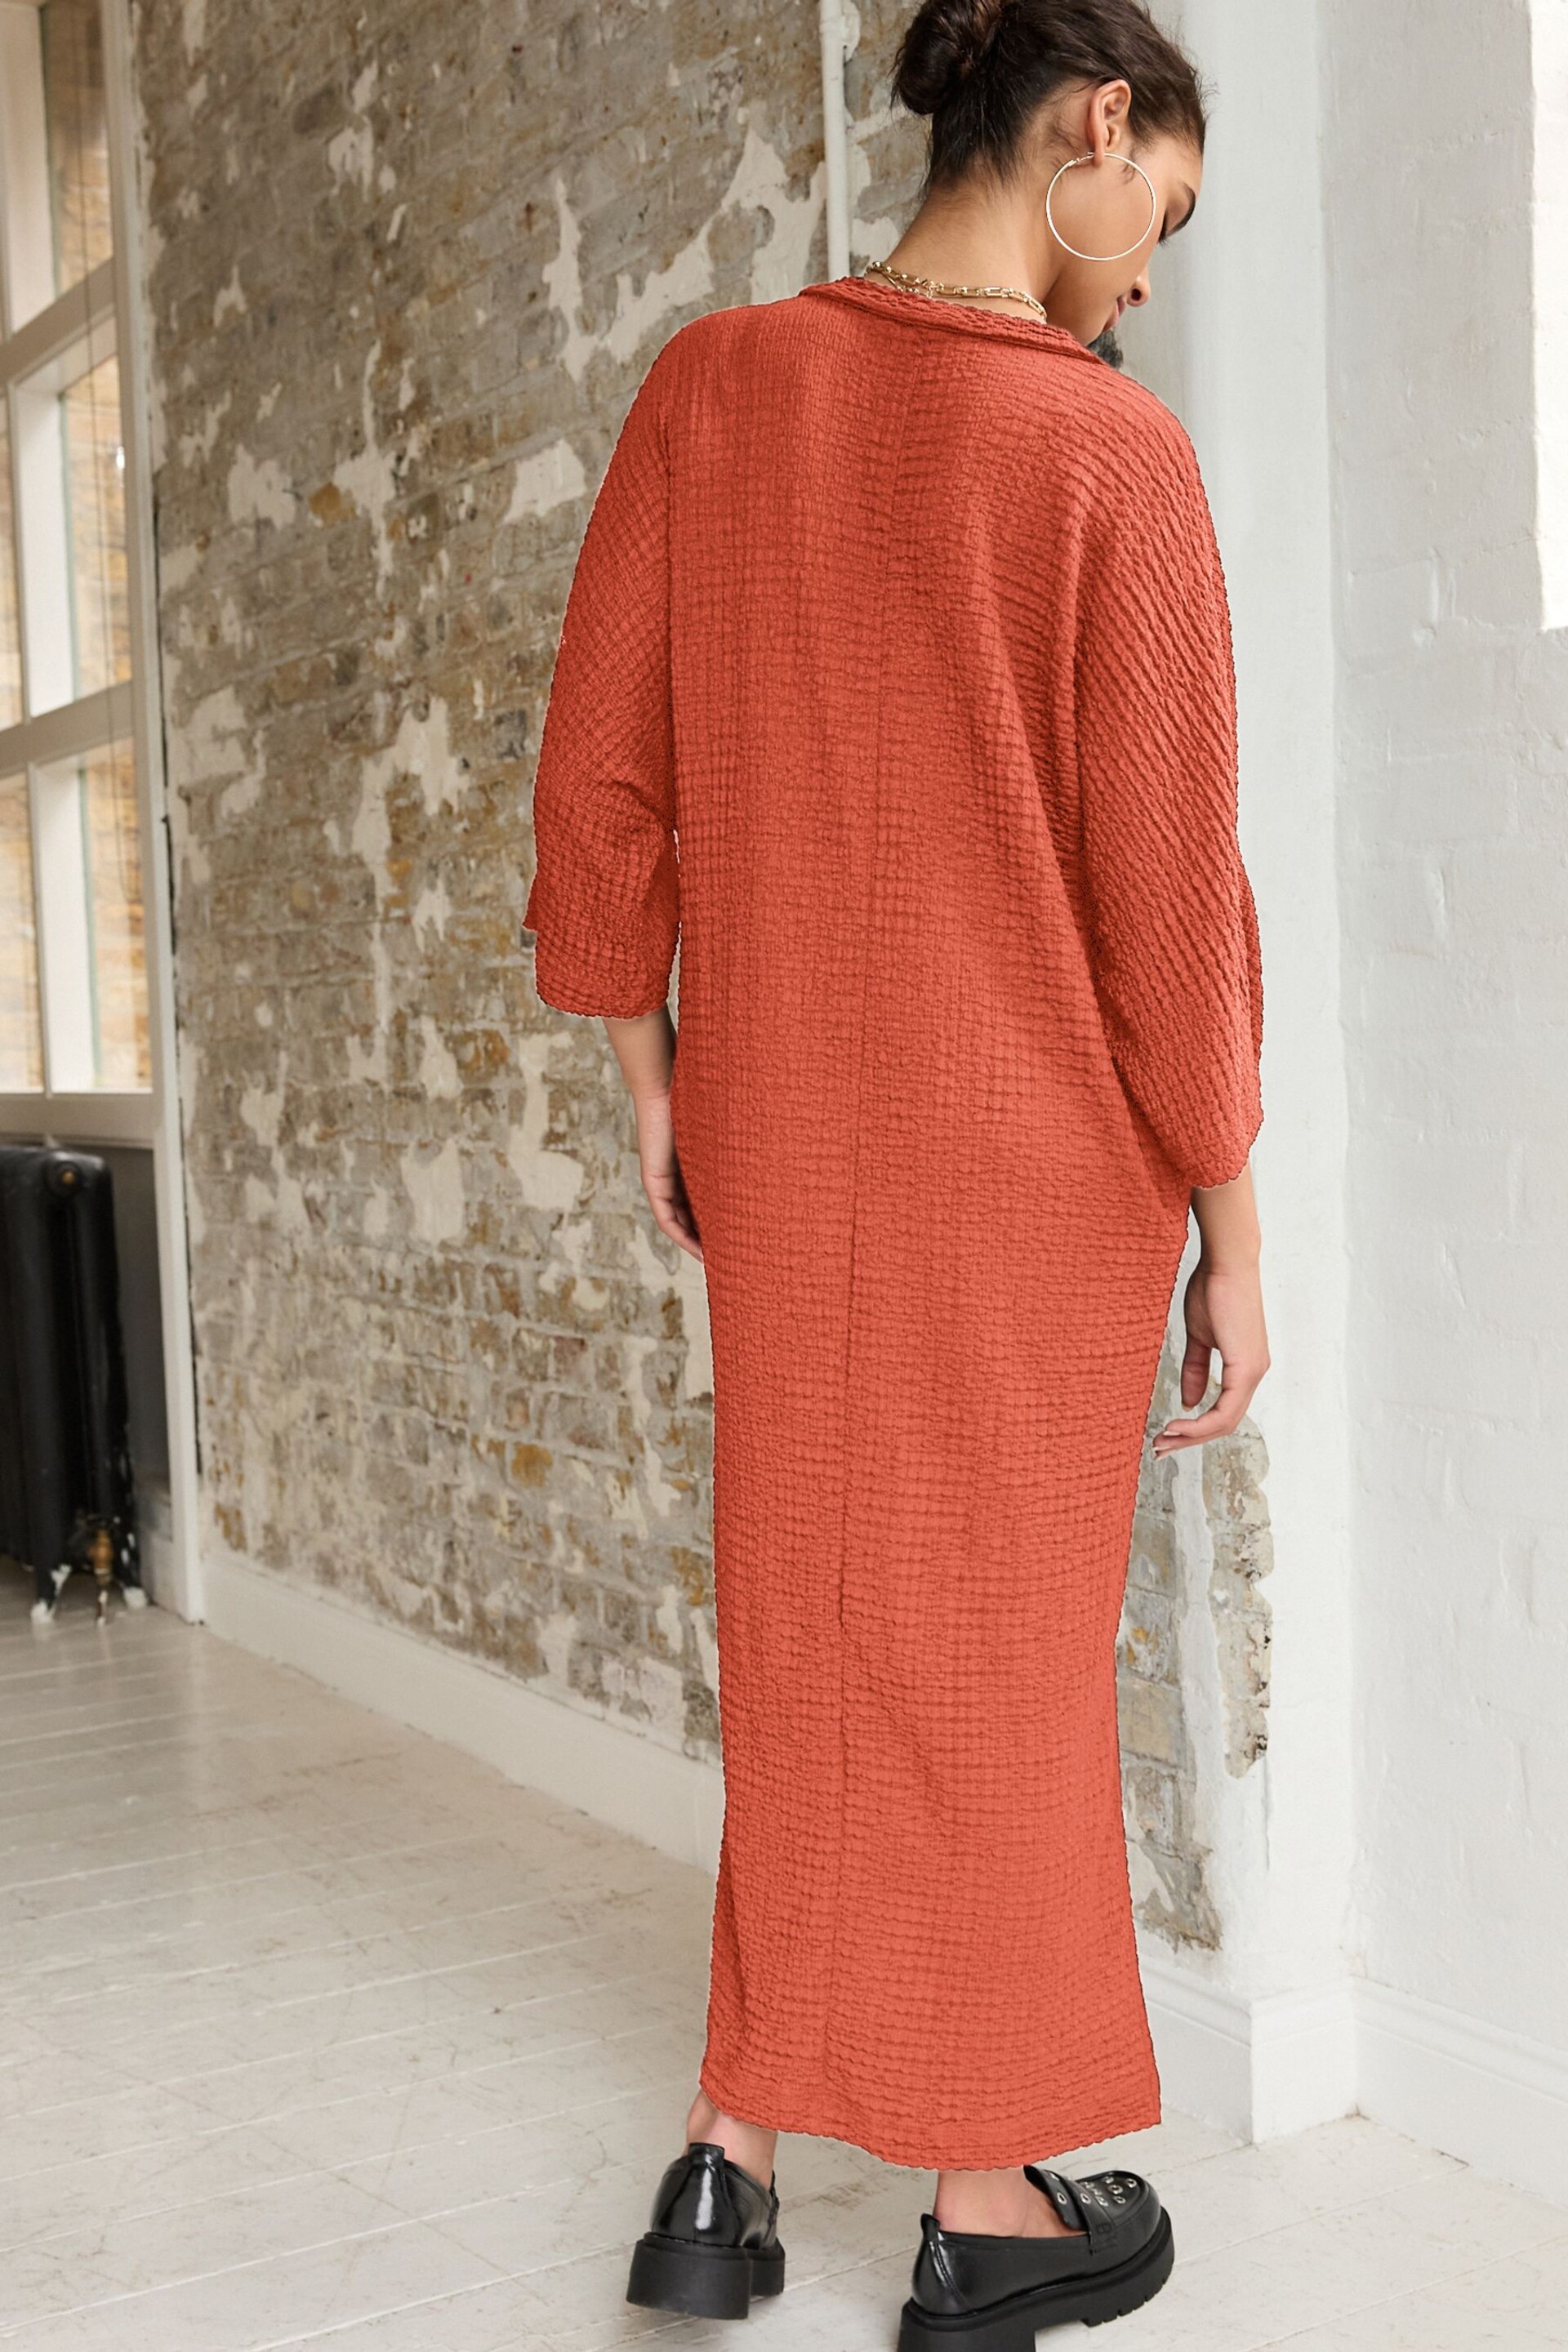 Rust Orange V-Neck Textured Midi Dress - Image 3 of 6